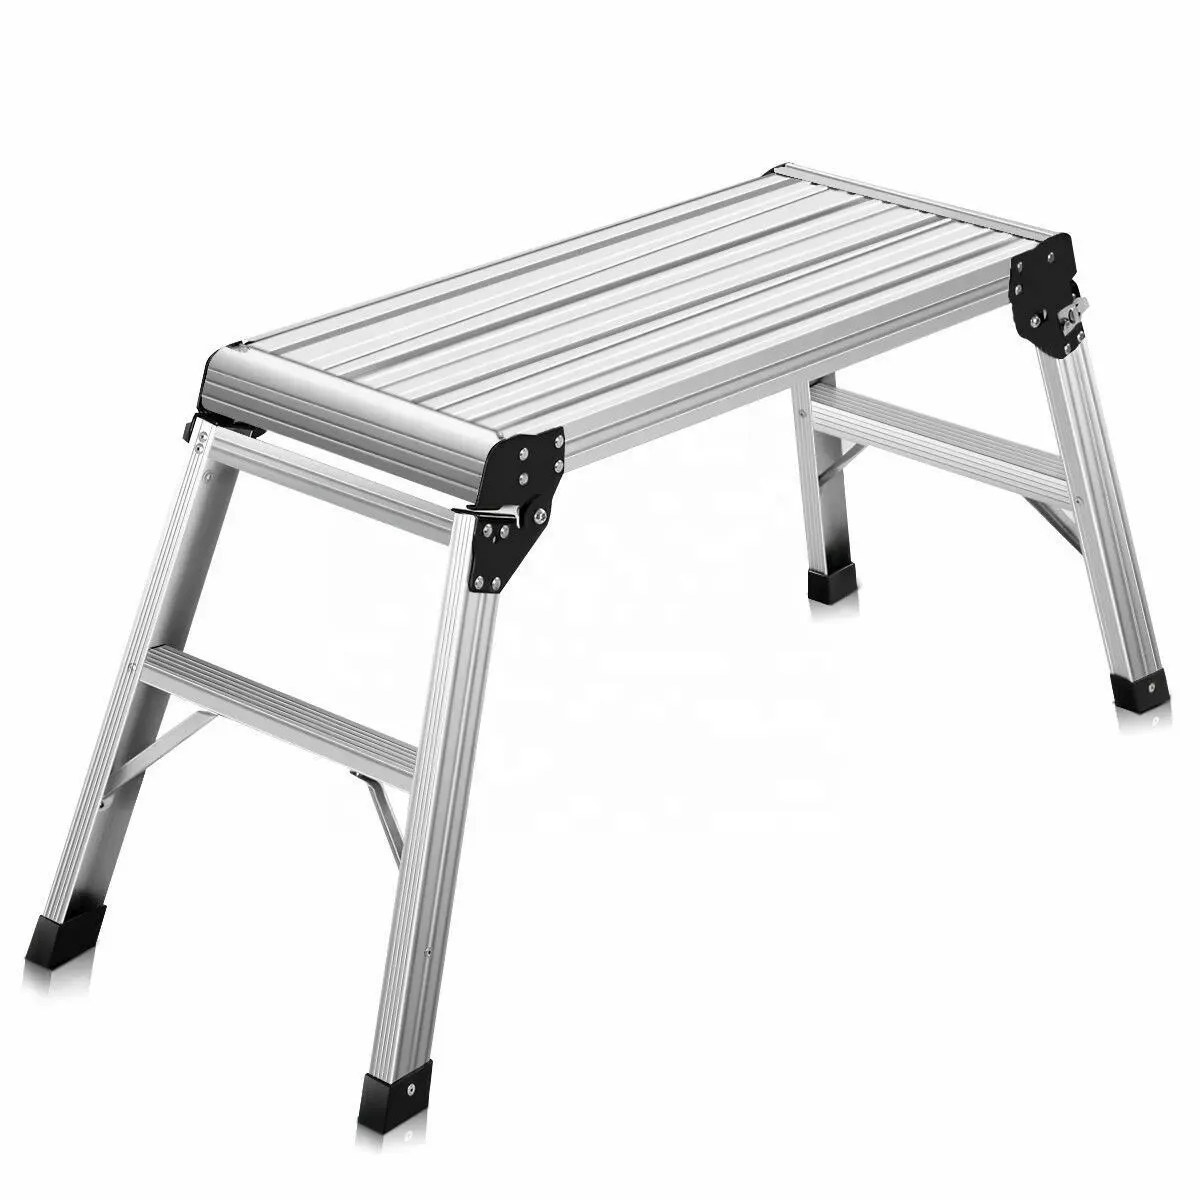 EN131 Compact Folding Aluminum Platform Step Up Work Bench Stool Ladder